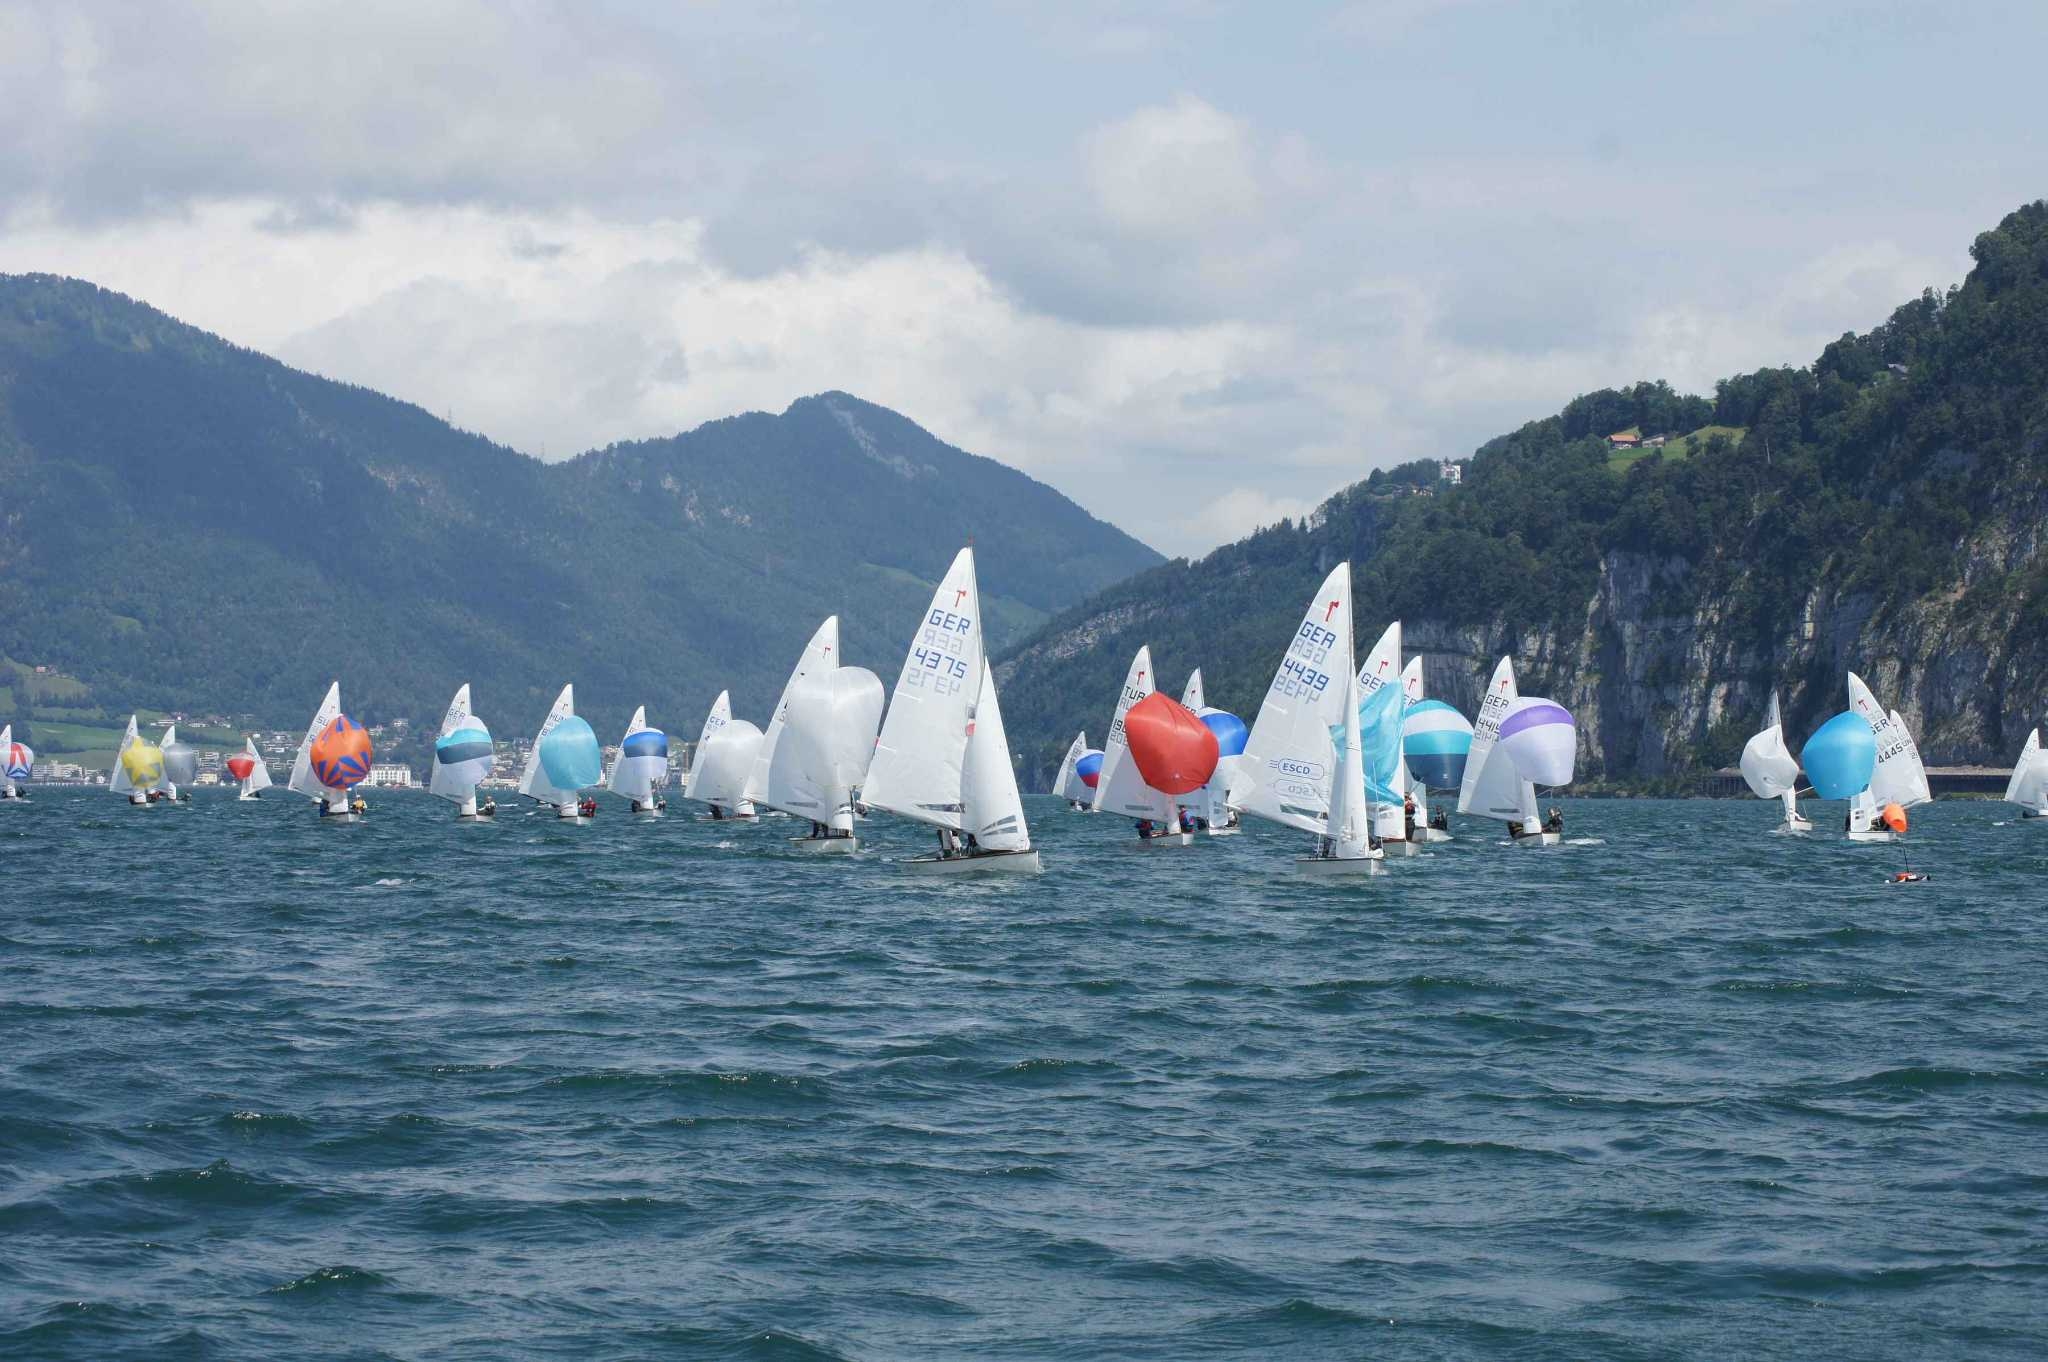  Pirat  European Championship 2021  Brunnen SUI  Final results  the Swiss